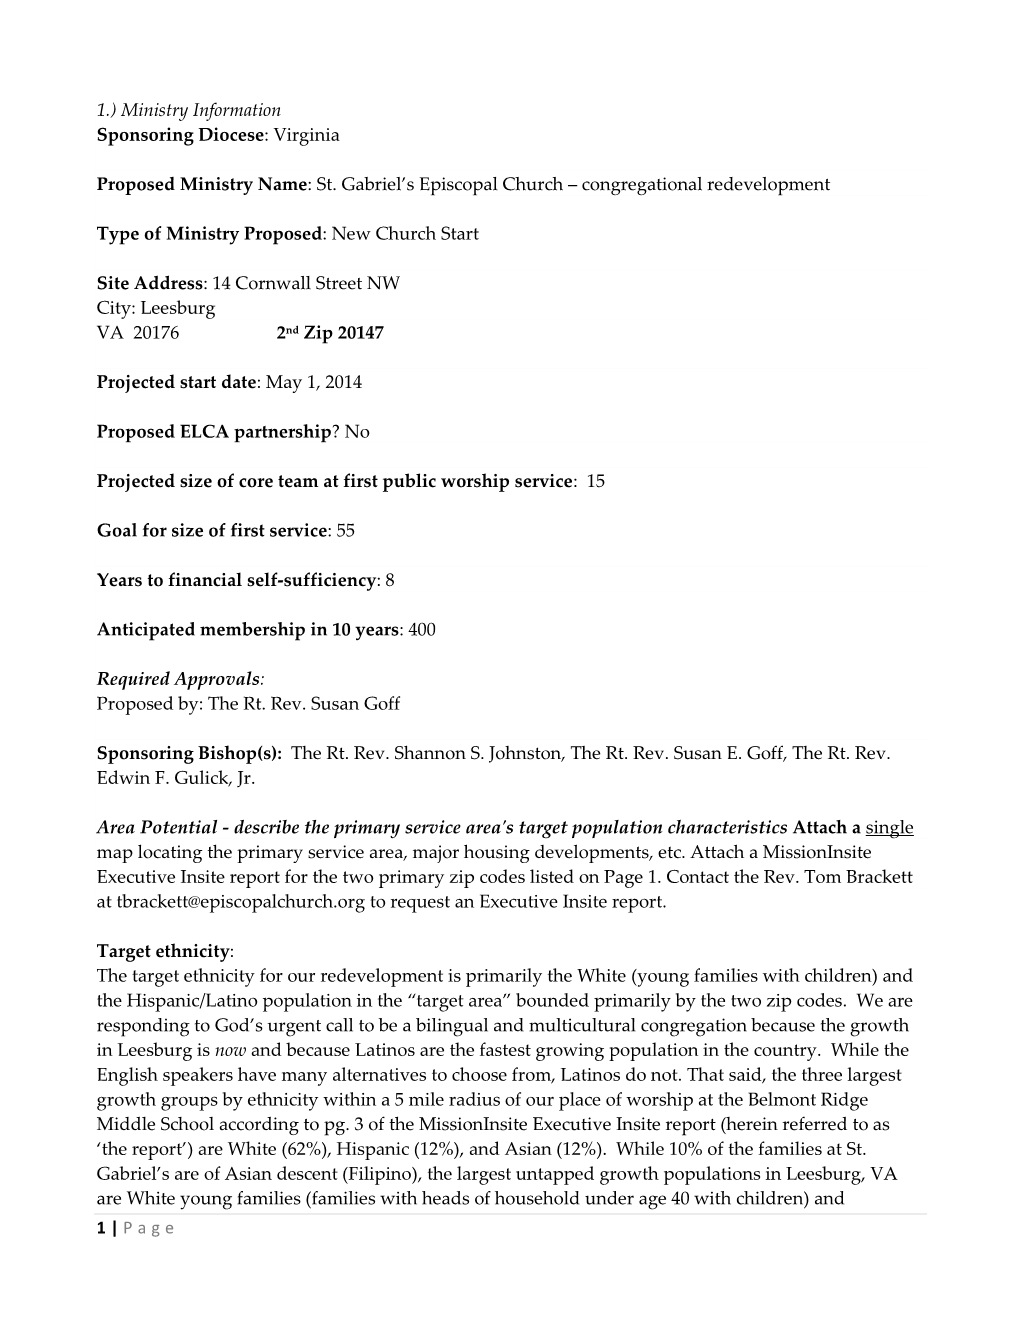 TEC Congregational Redevelopment Matching Grant 2013 V011214